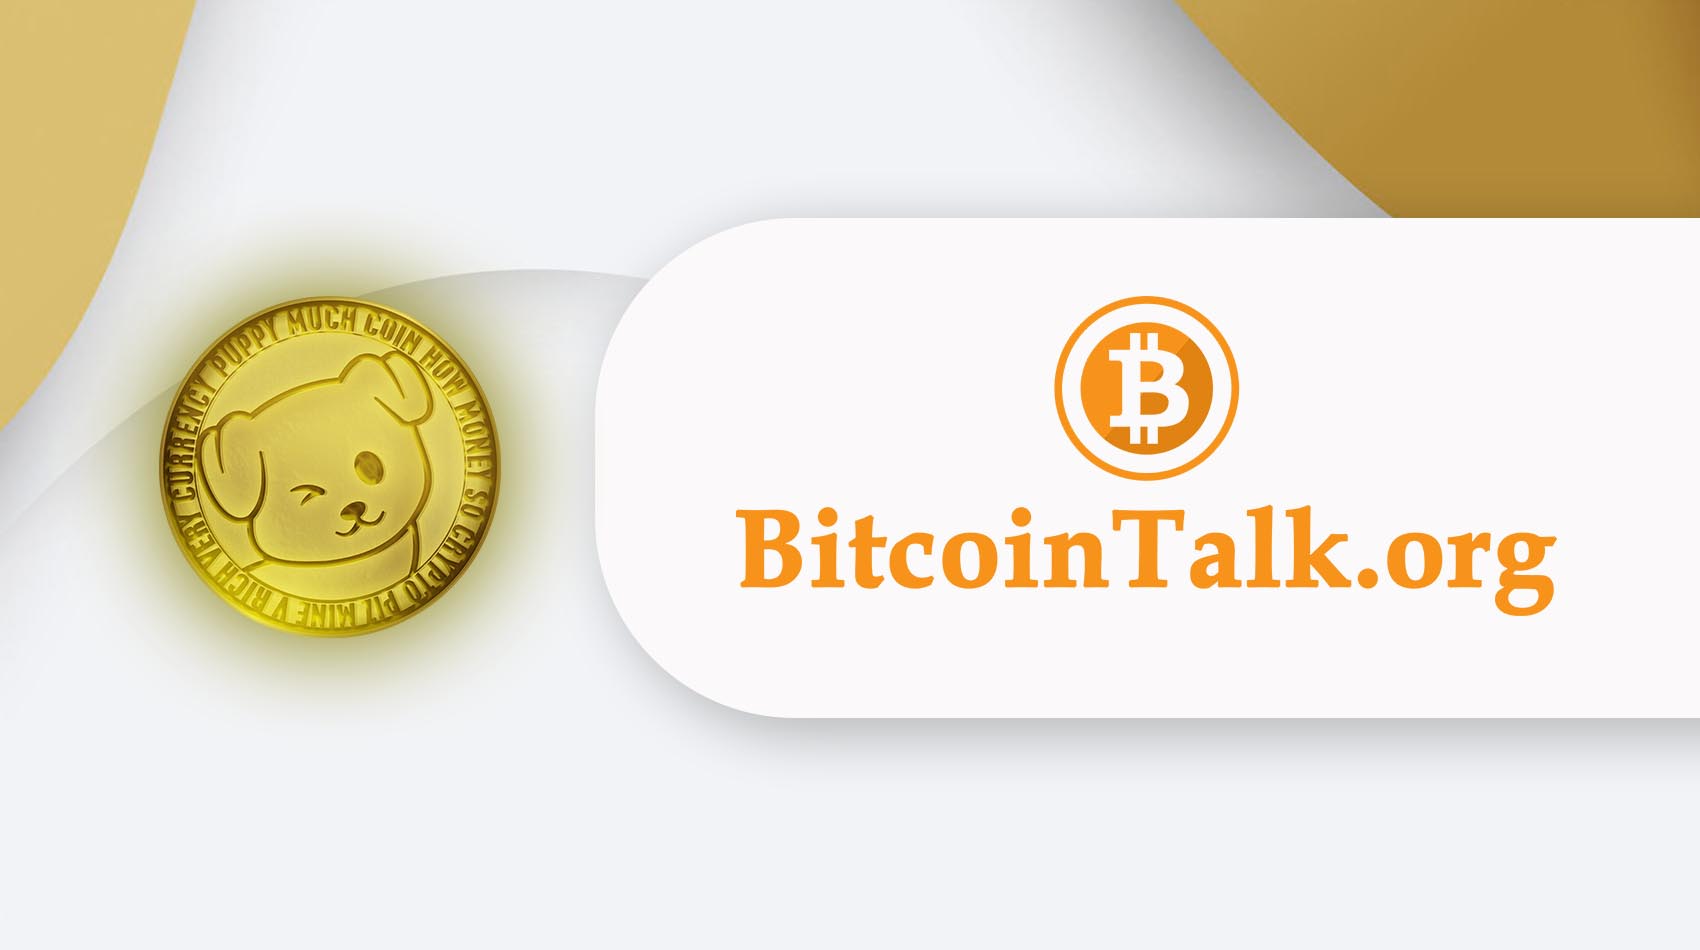 Puppy coin community in Bitcointalk.org